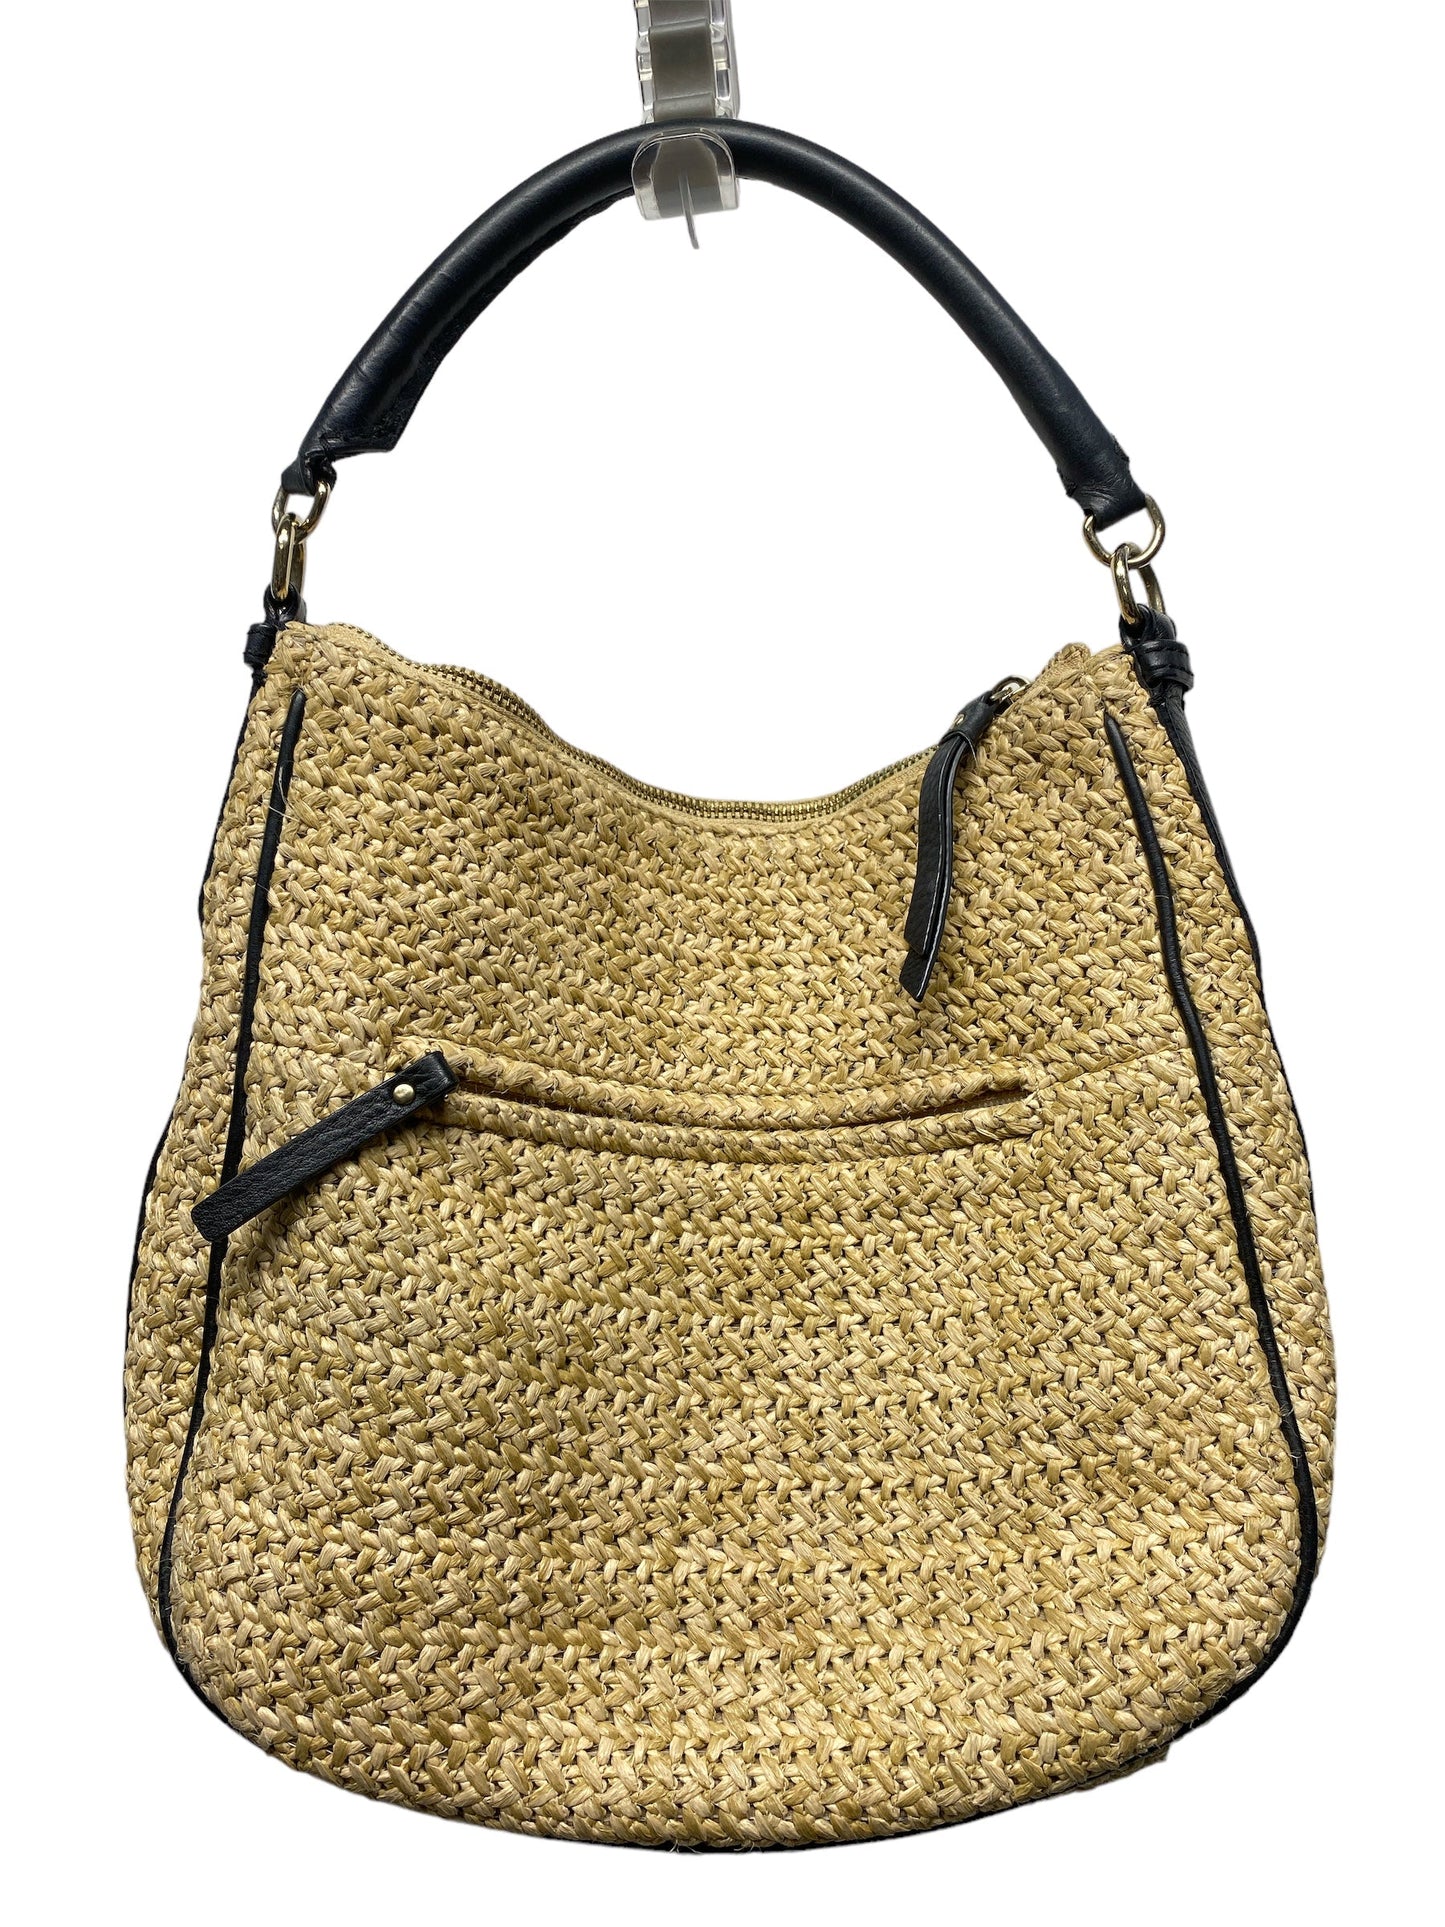 Tan Handbag Designer Kate Spade, Size Medium